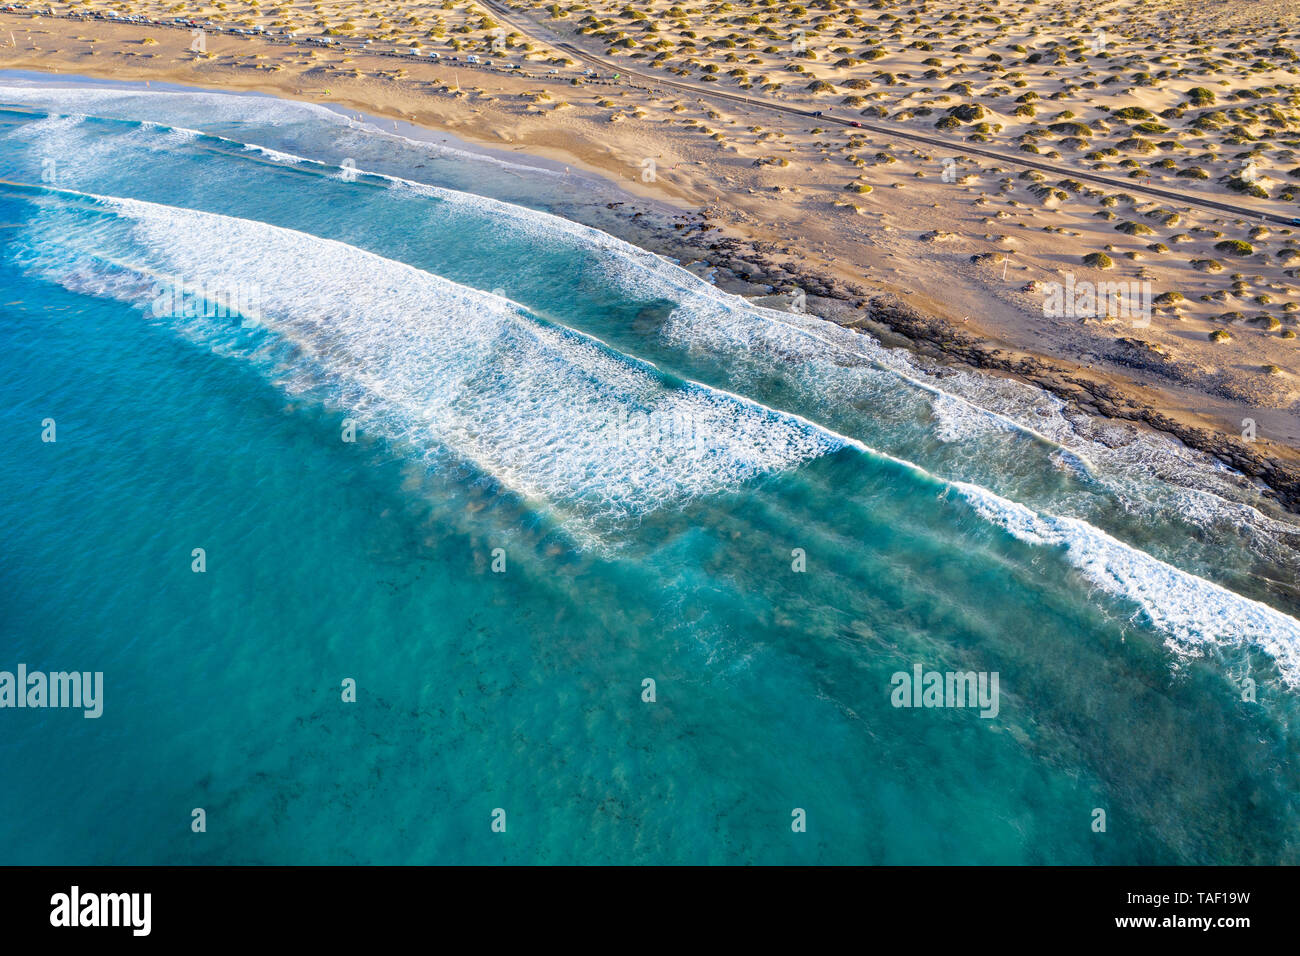 Spain, Canary Islands, Lanzarote, Caleta de Famara, Playa de Famara, waves on sandy beach, aerial view Stock Photo